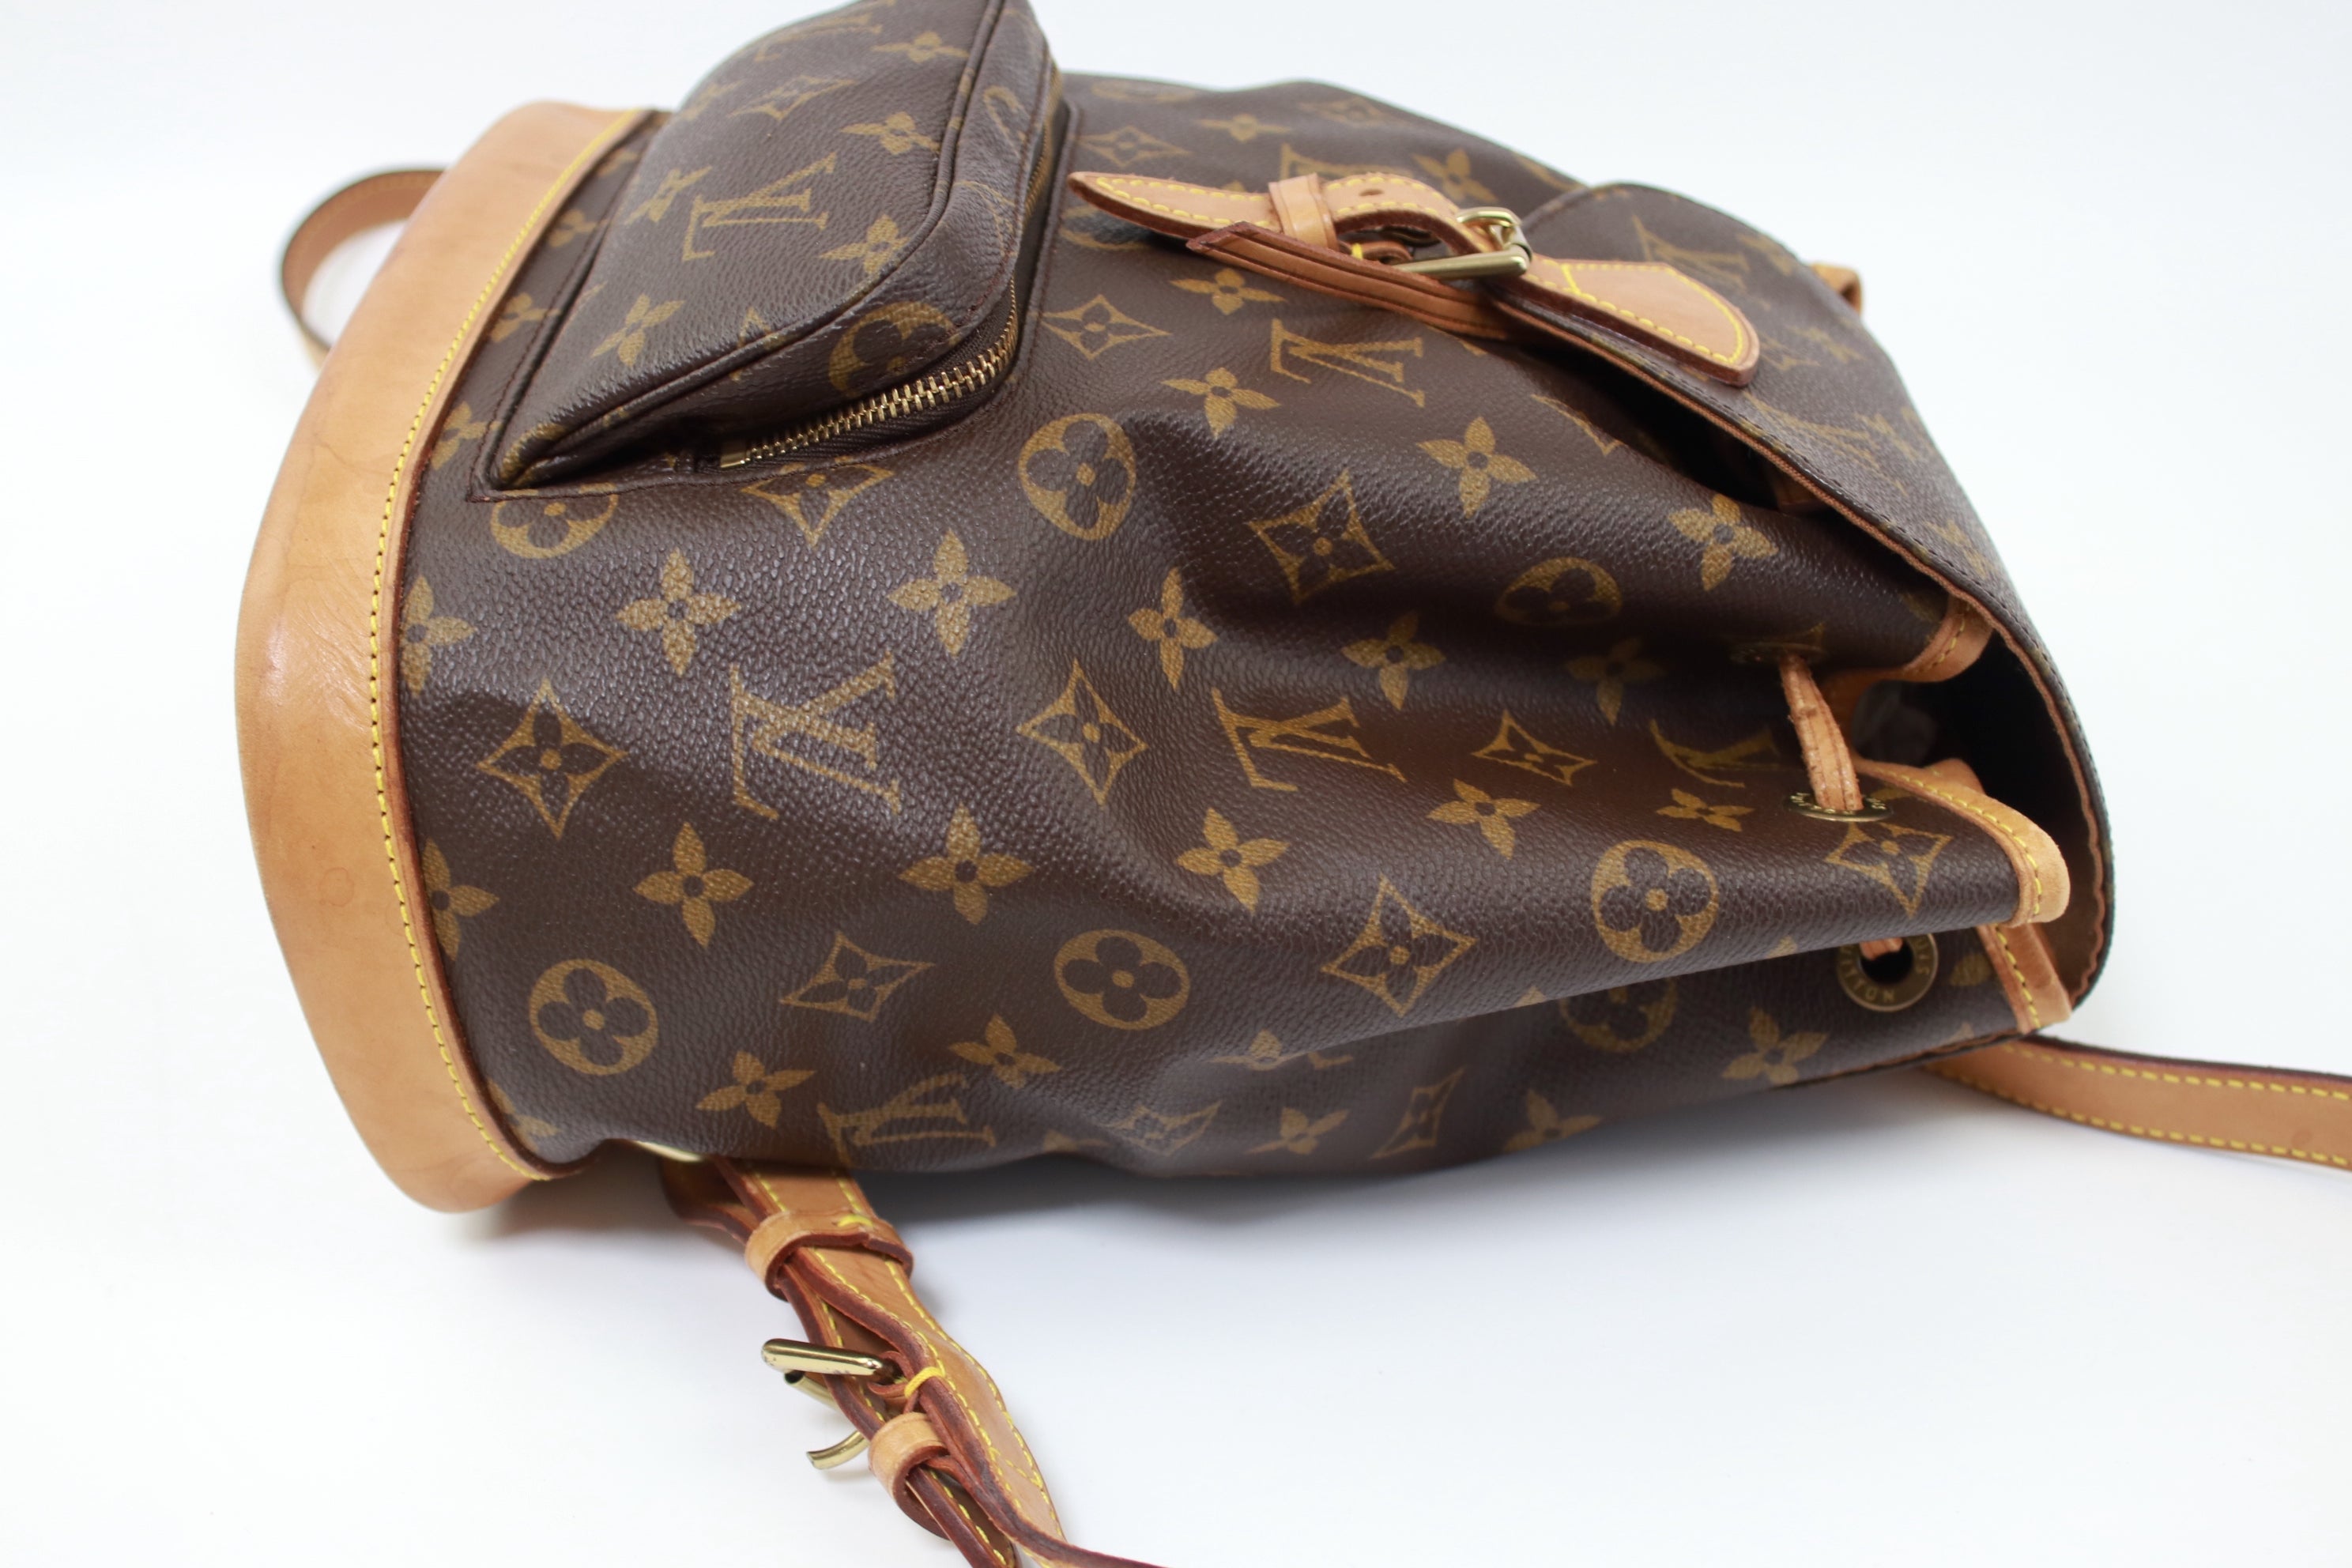 Louis Vuitton Sac Flanerie 45 Shoulder Bag Tote Bag Used (6615)